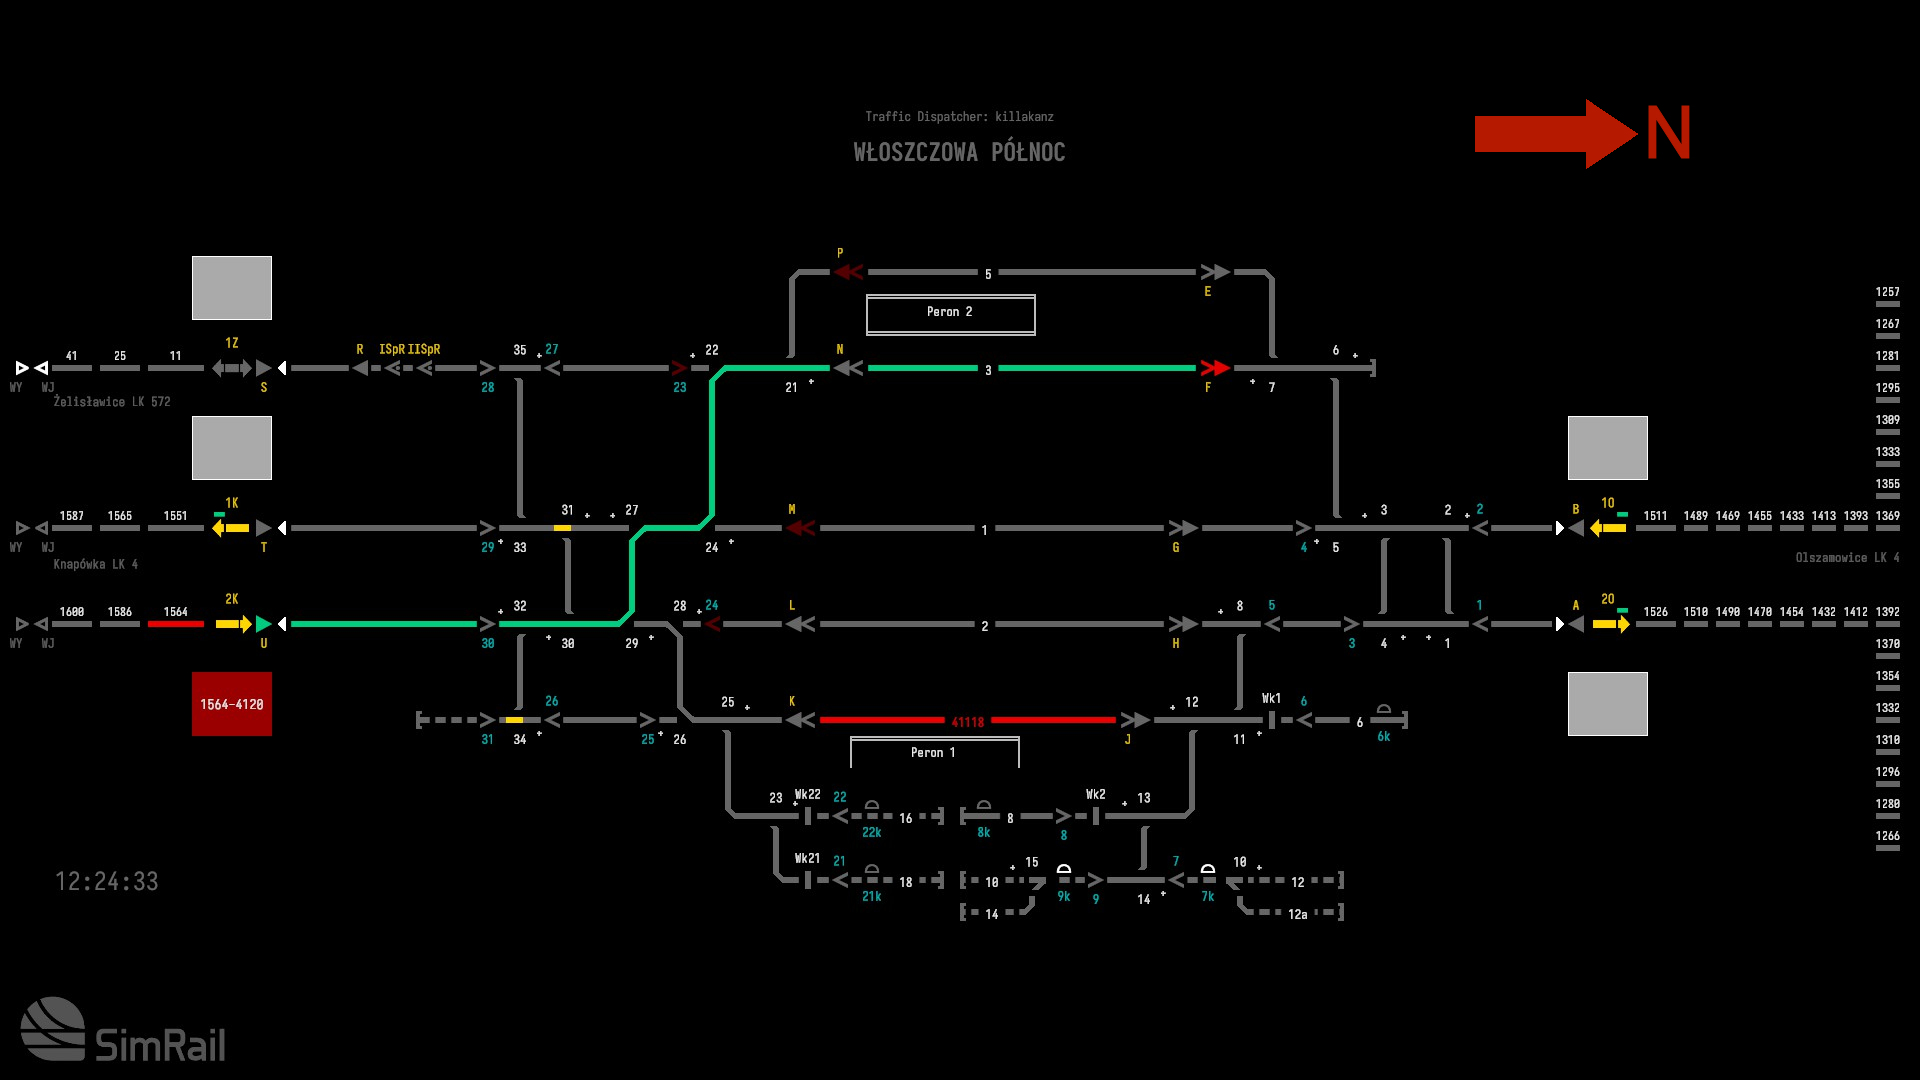 SimRail - The Railway Simulator - Basic Dispatching Full Guide - Wloszczowa Polnoc - In Detail (computerised) - B587D6A